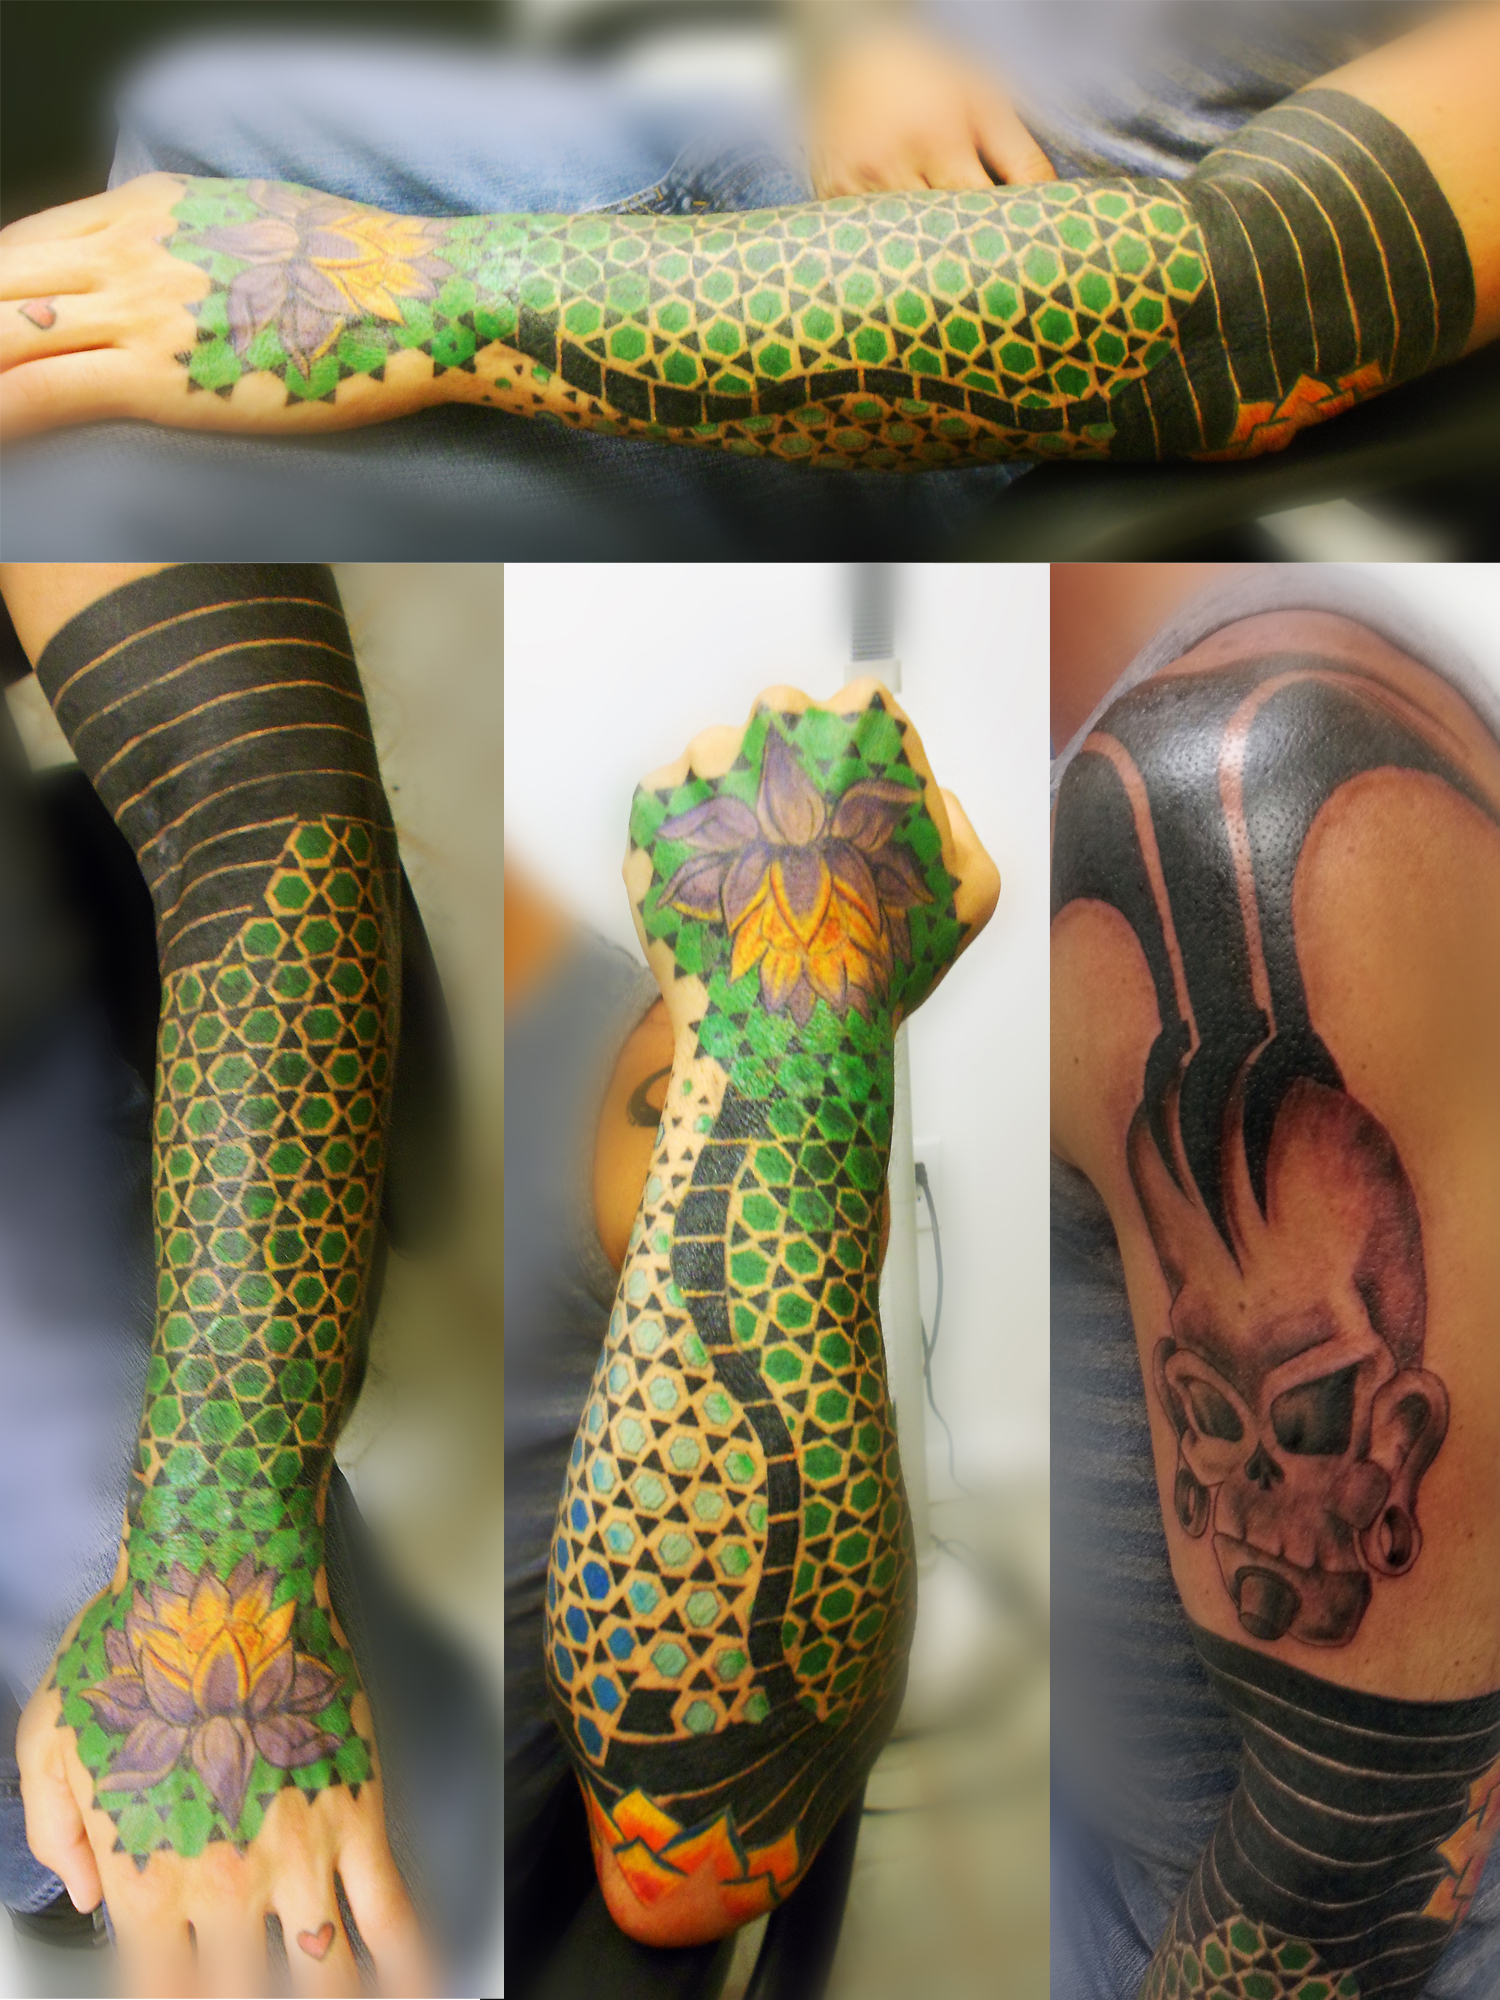 Geometric Colorful Sleeve Tattoo In Progress 